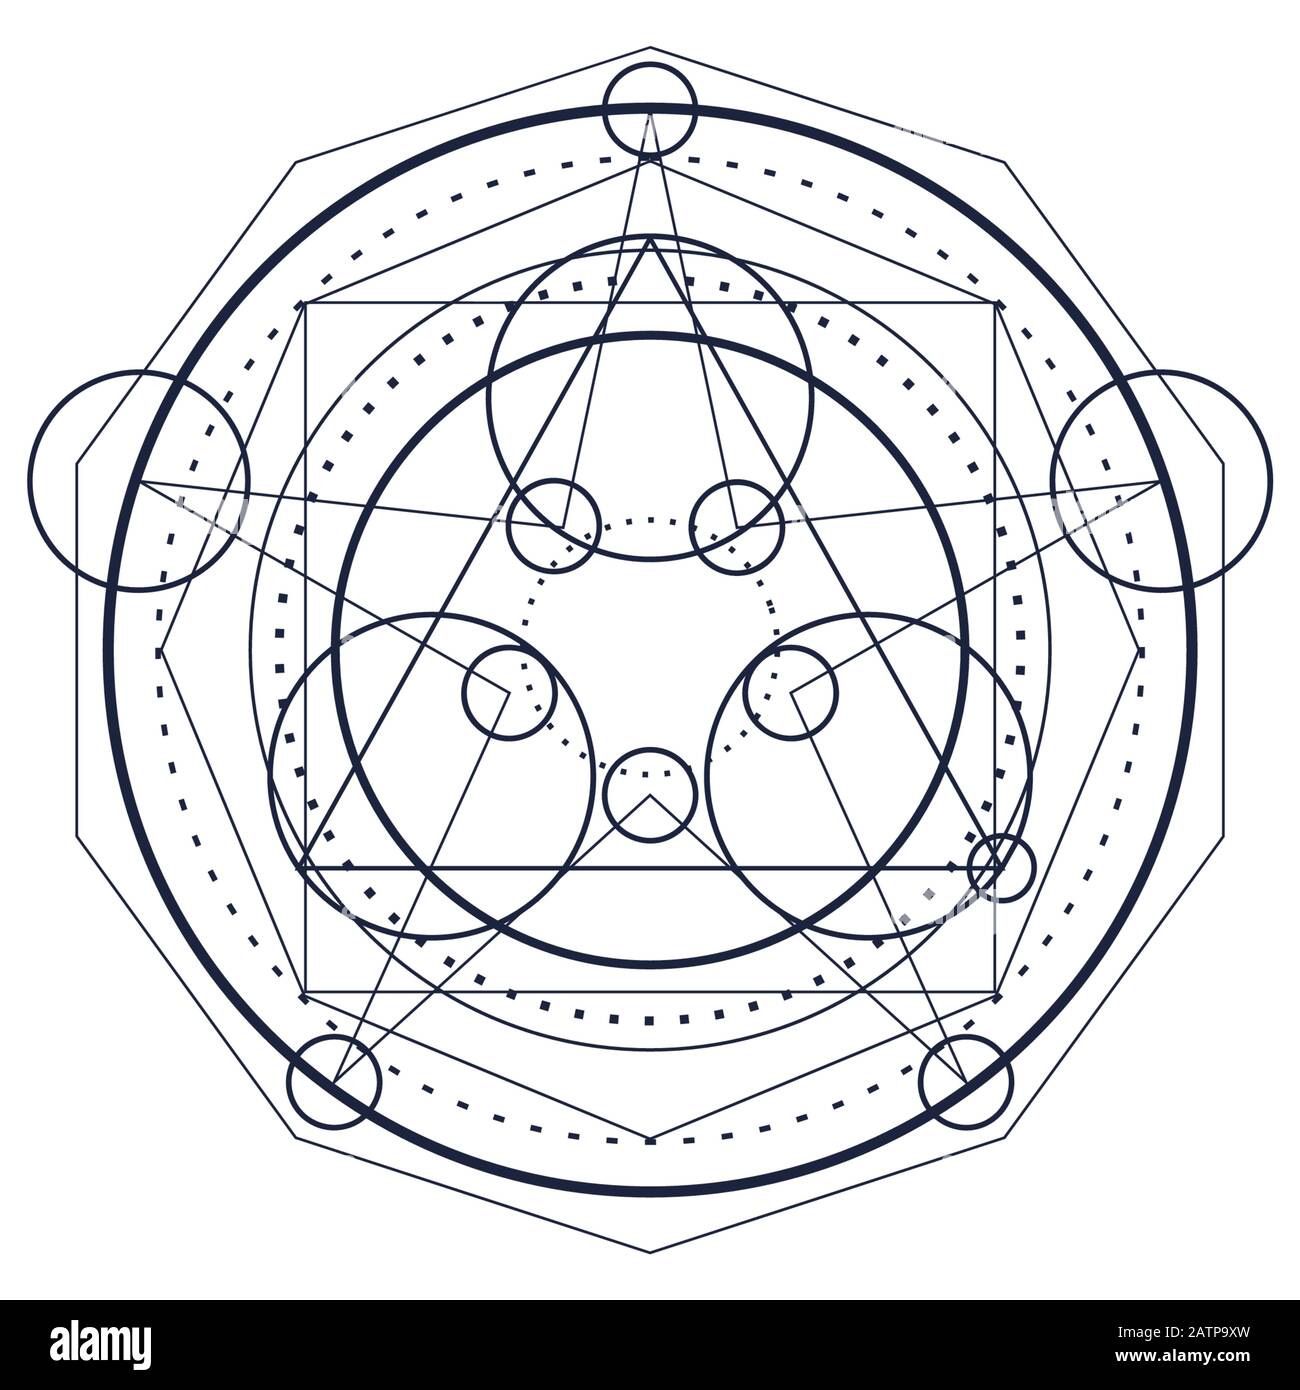 Mystical occult symbol. Stock Vector